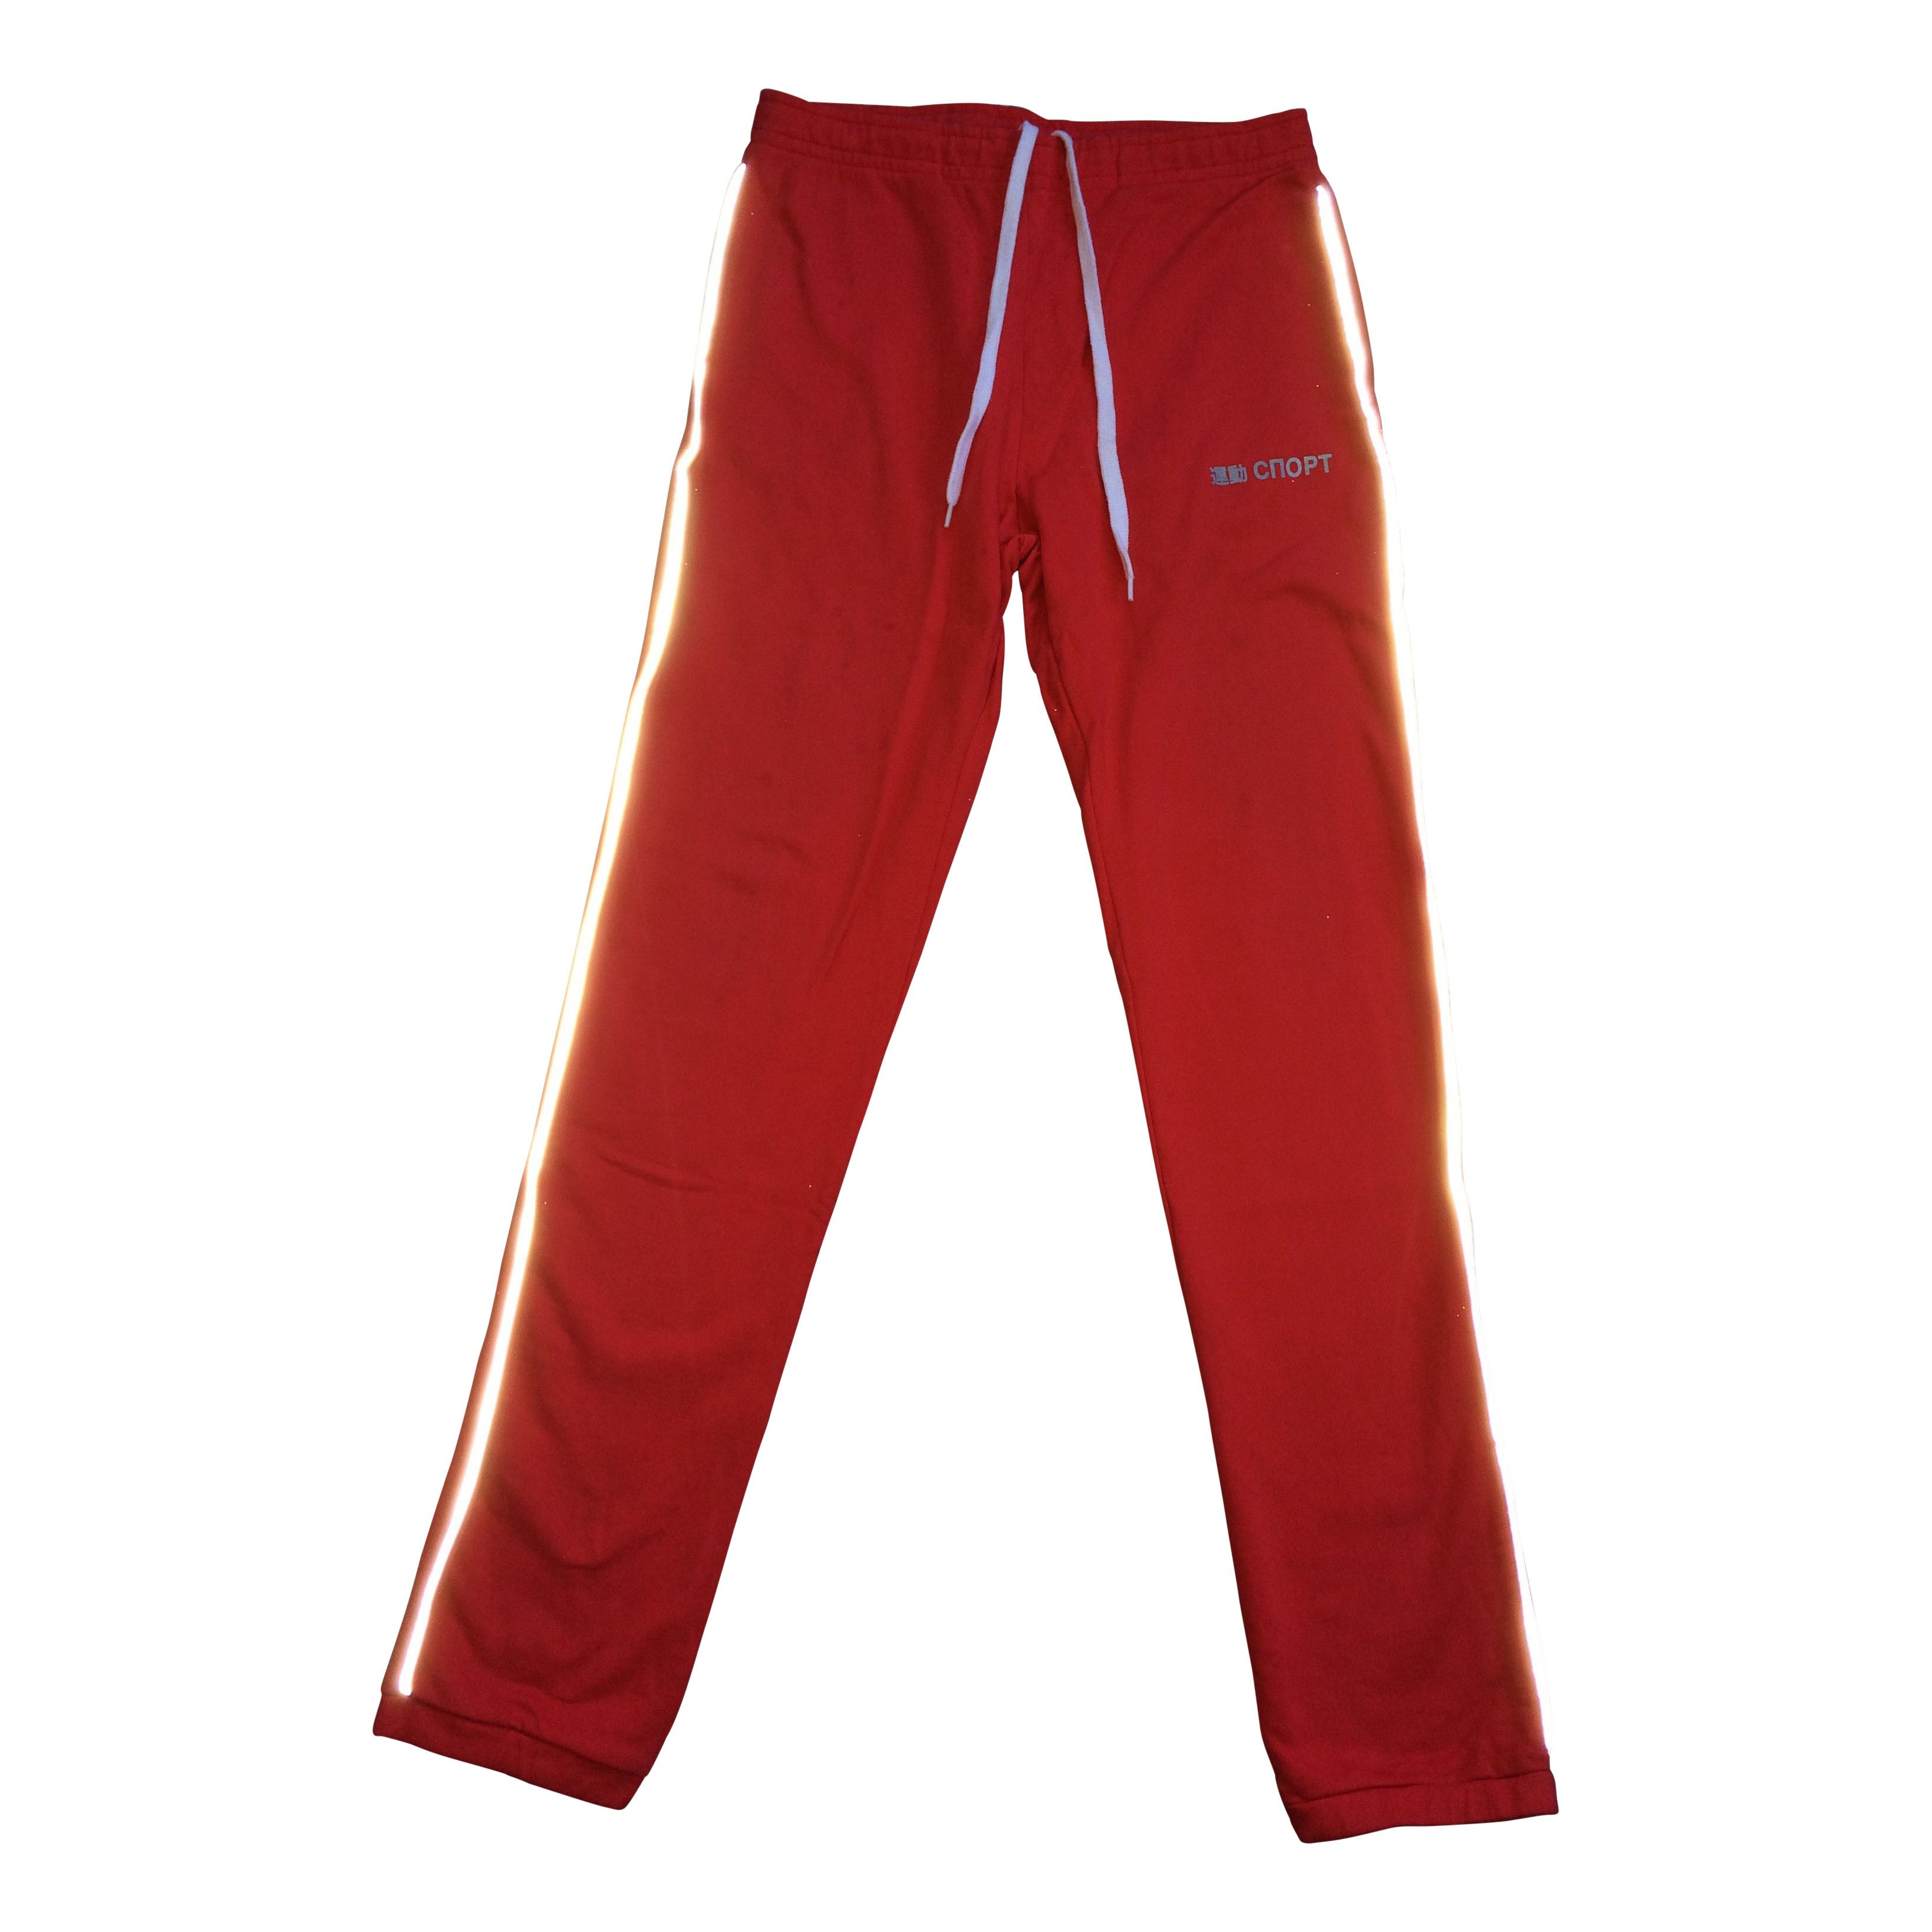 image of F/w 2015 Gosha Rubchinskiy 3M Sweatpants in Red, Men's (Size 30)